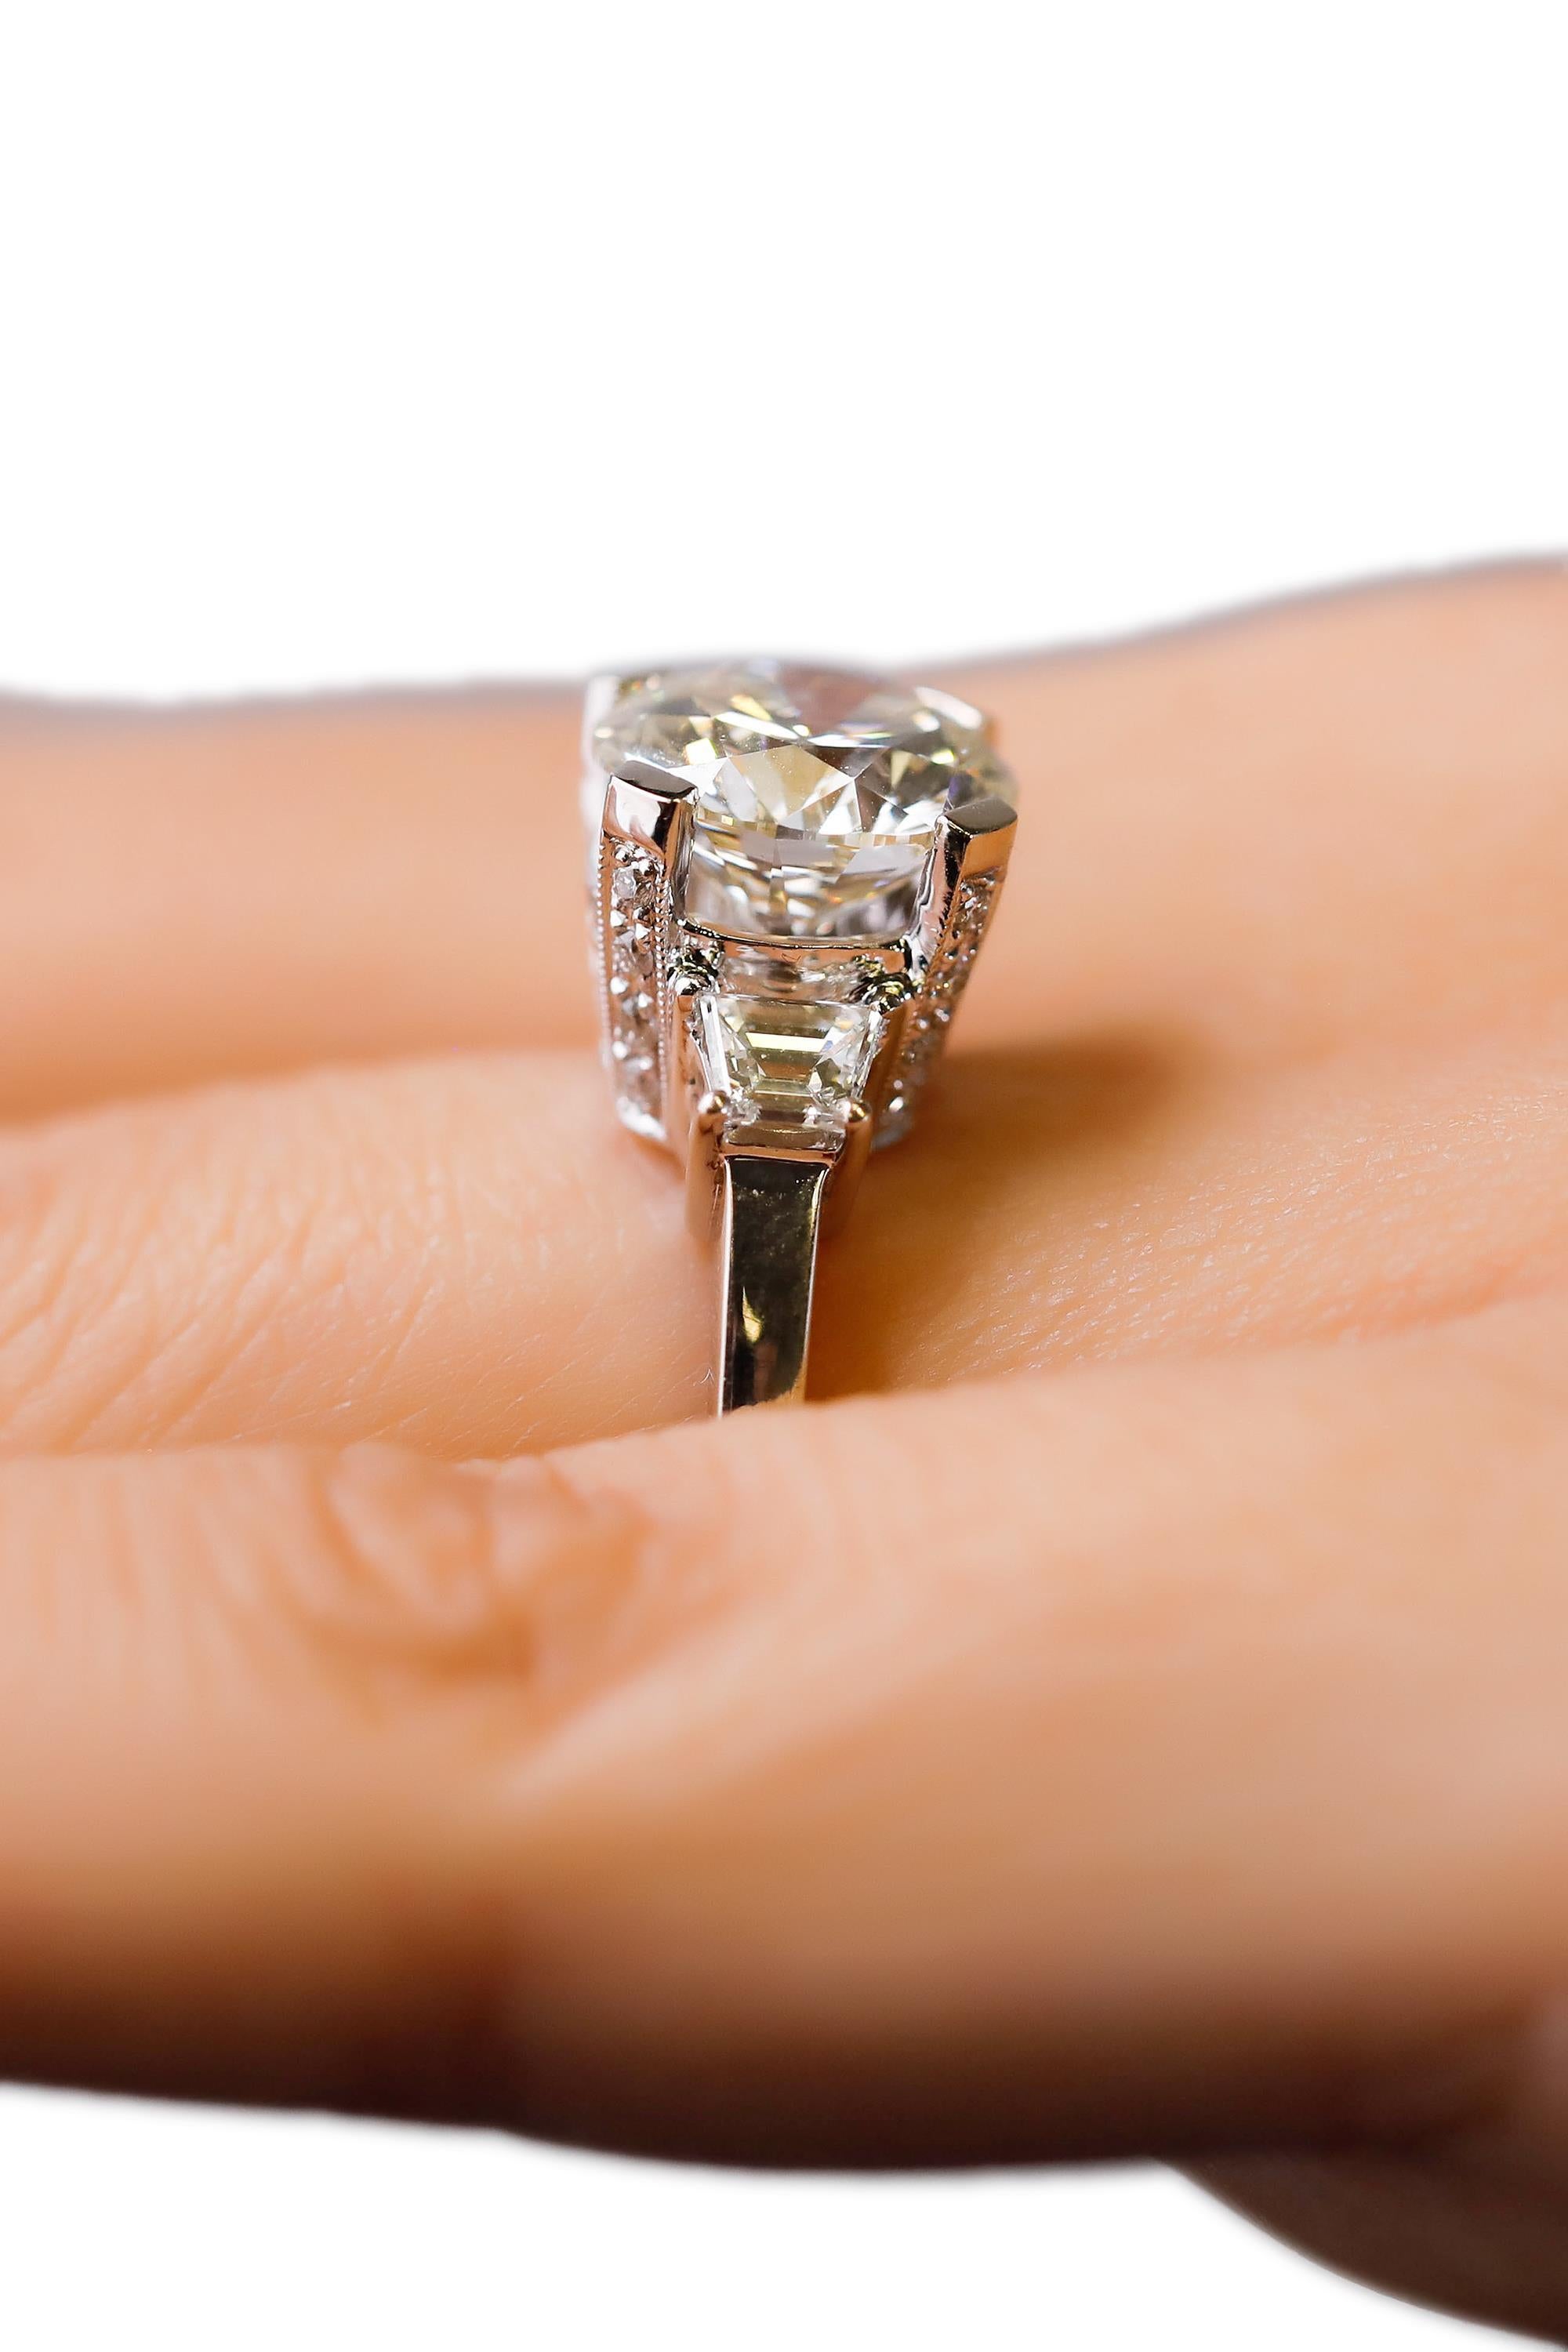 Romantic 14 Karat White Gold 4 Carat Round Diamond Solitaire Engagement Ring by Natalie K